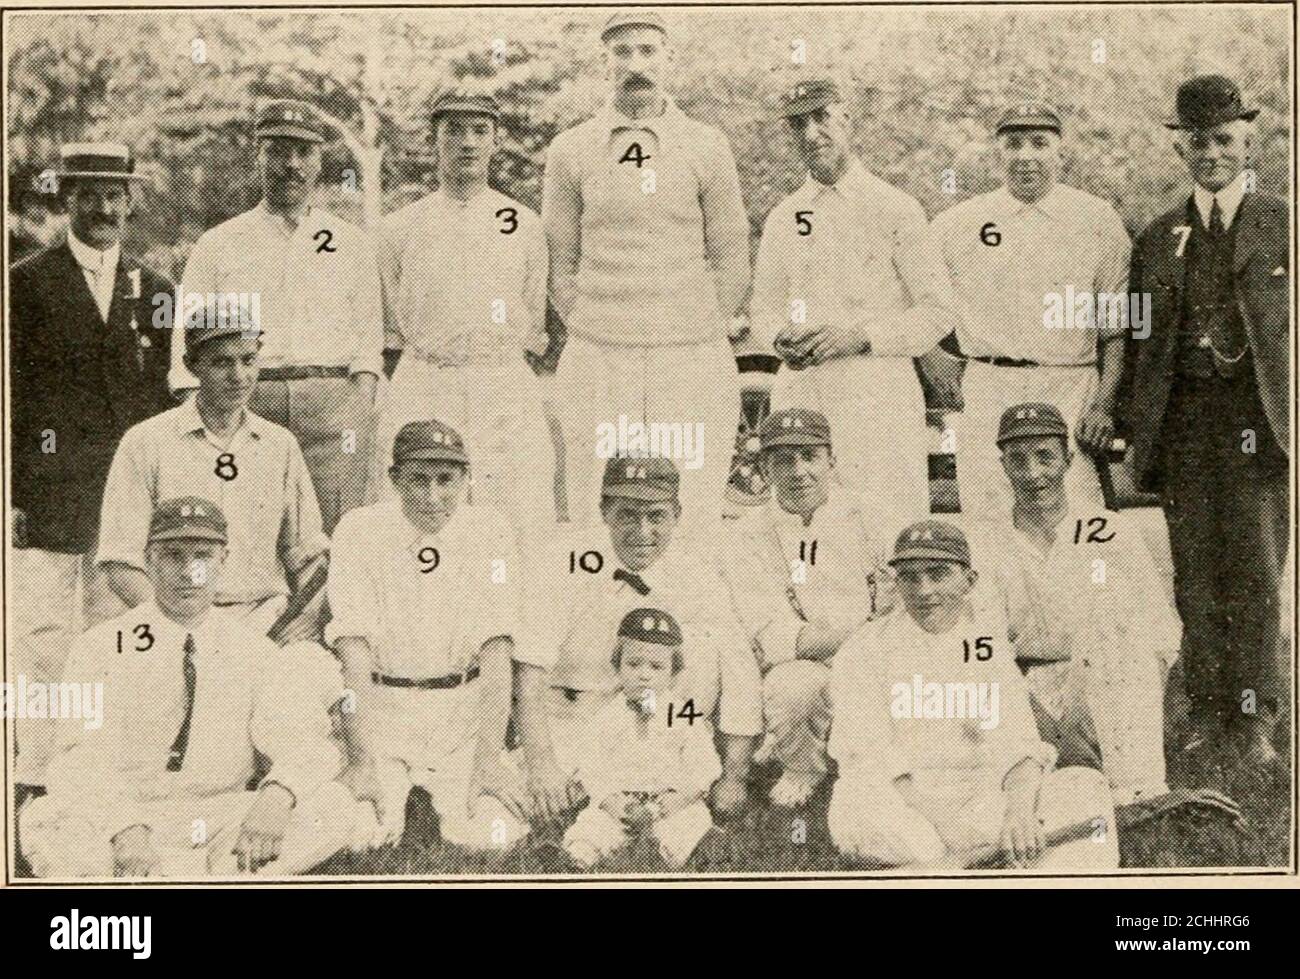 . Spalding's official cricket guide; with which is incorporated the American cricket annual . TENNYSON CRICKET CLUB, IlllIyADELrniA, PA. iJaii. !&lt;.. r..ul, rhoto.. 1, Towus, Scorer; 2, Jvulsoii; .3. J. Skinner; 4. Dodson; ., Holyoke; 6, Chandler;7, G. Hare, Pres.; 8, P. Skinner; &lt;J, King; 10, H. Goodwin; 11, Coyne; 12,Dawson: 13, MoAflam; 14. J. Goodwin, Mascot; 15, Langridge. BRITISH-AMEKICAN CRICKET CLUB, ROCHESTER, N. Y. SPALDINGS OFFICIAL CRICKET GDIDE. 29 R. K E.11.C.I).H.R.F.W Bonnor L. Stointhal.. Fitt Ings. BATTING .SO. R.Aver. 3 41 41.001 88 29.33 0 192 27.43 1 45 22..500 45 22. Stock Photo